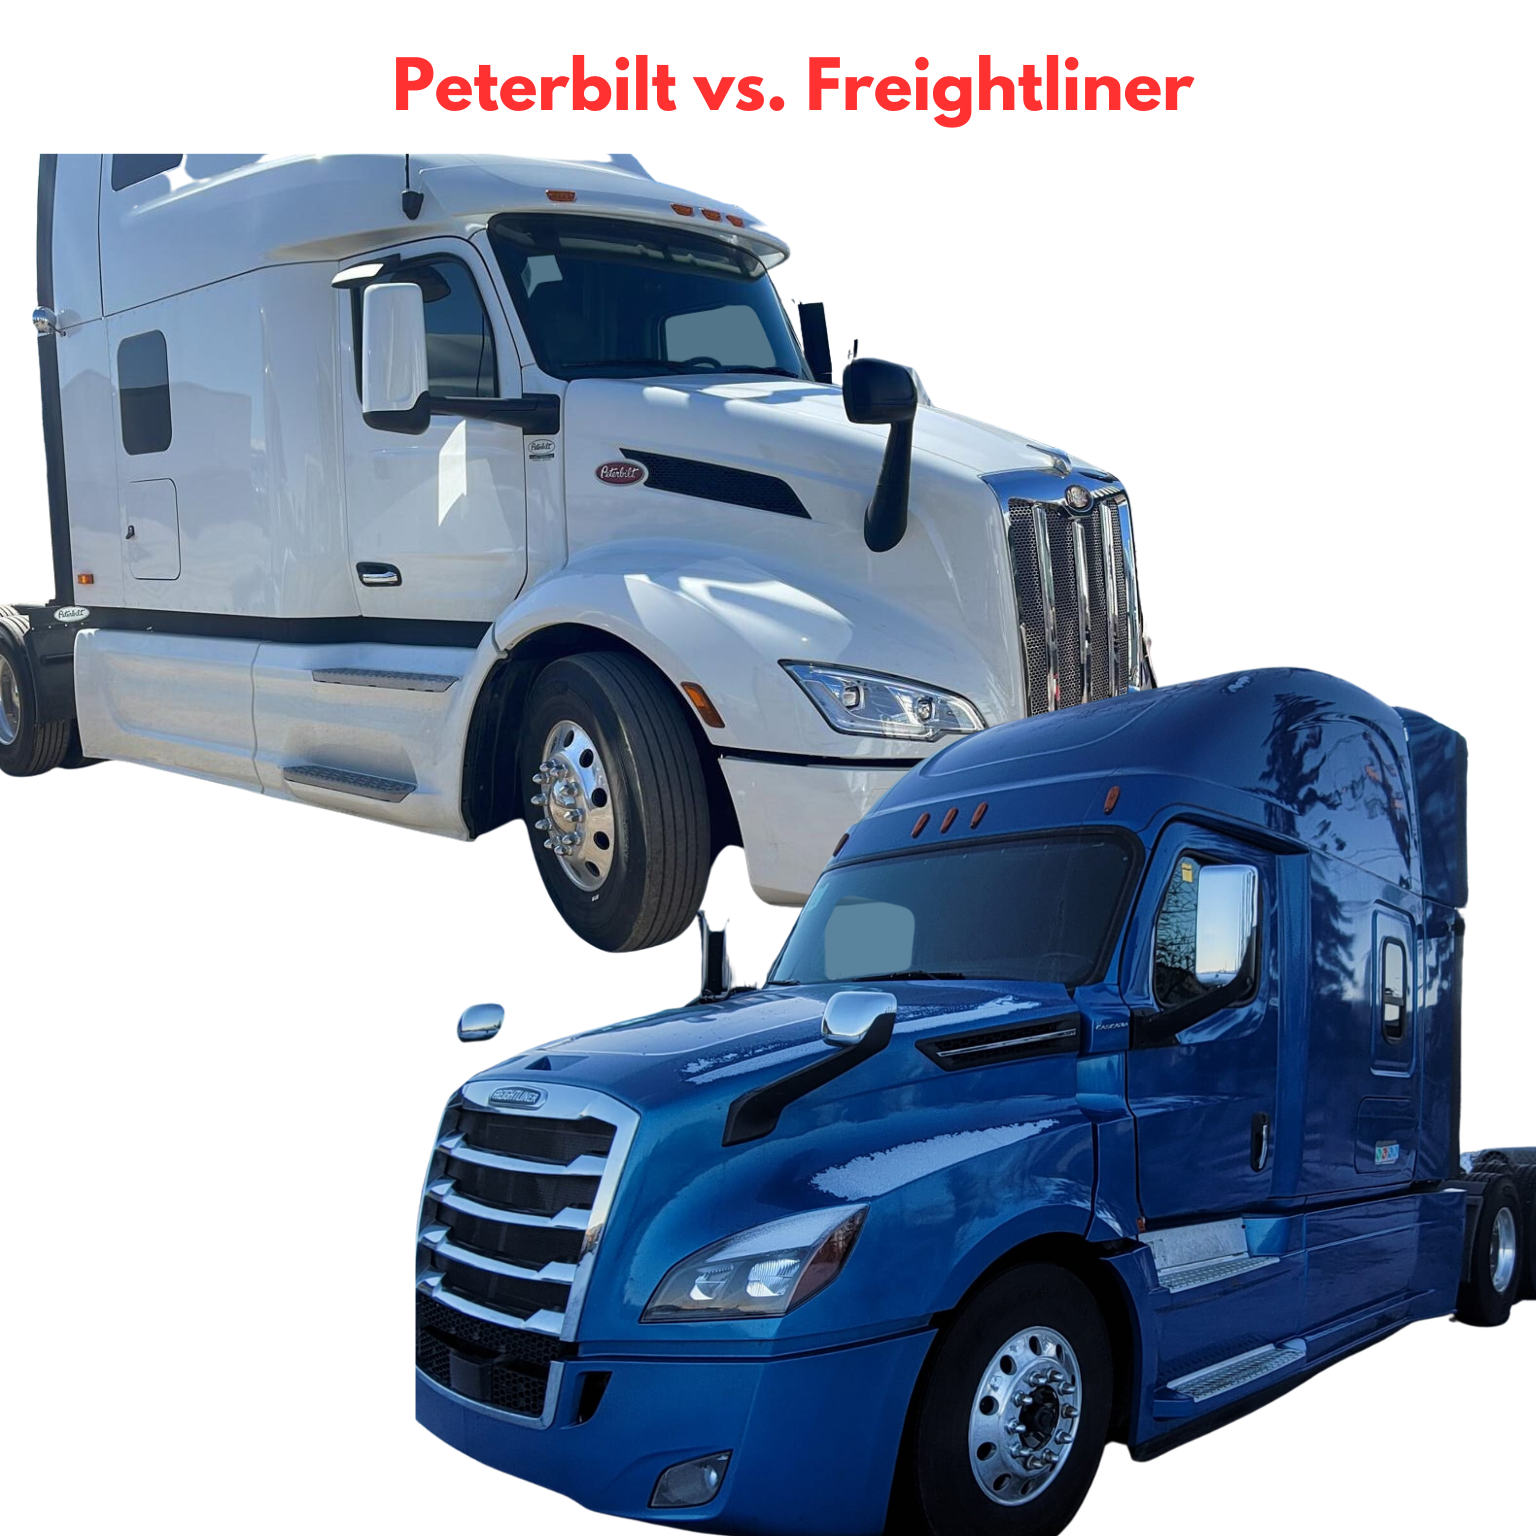 Peterbilt vs. Freightliner comparison guide for truckers